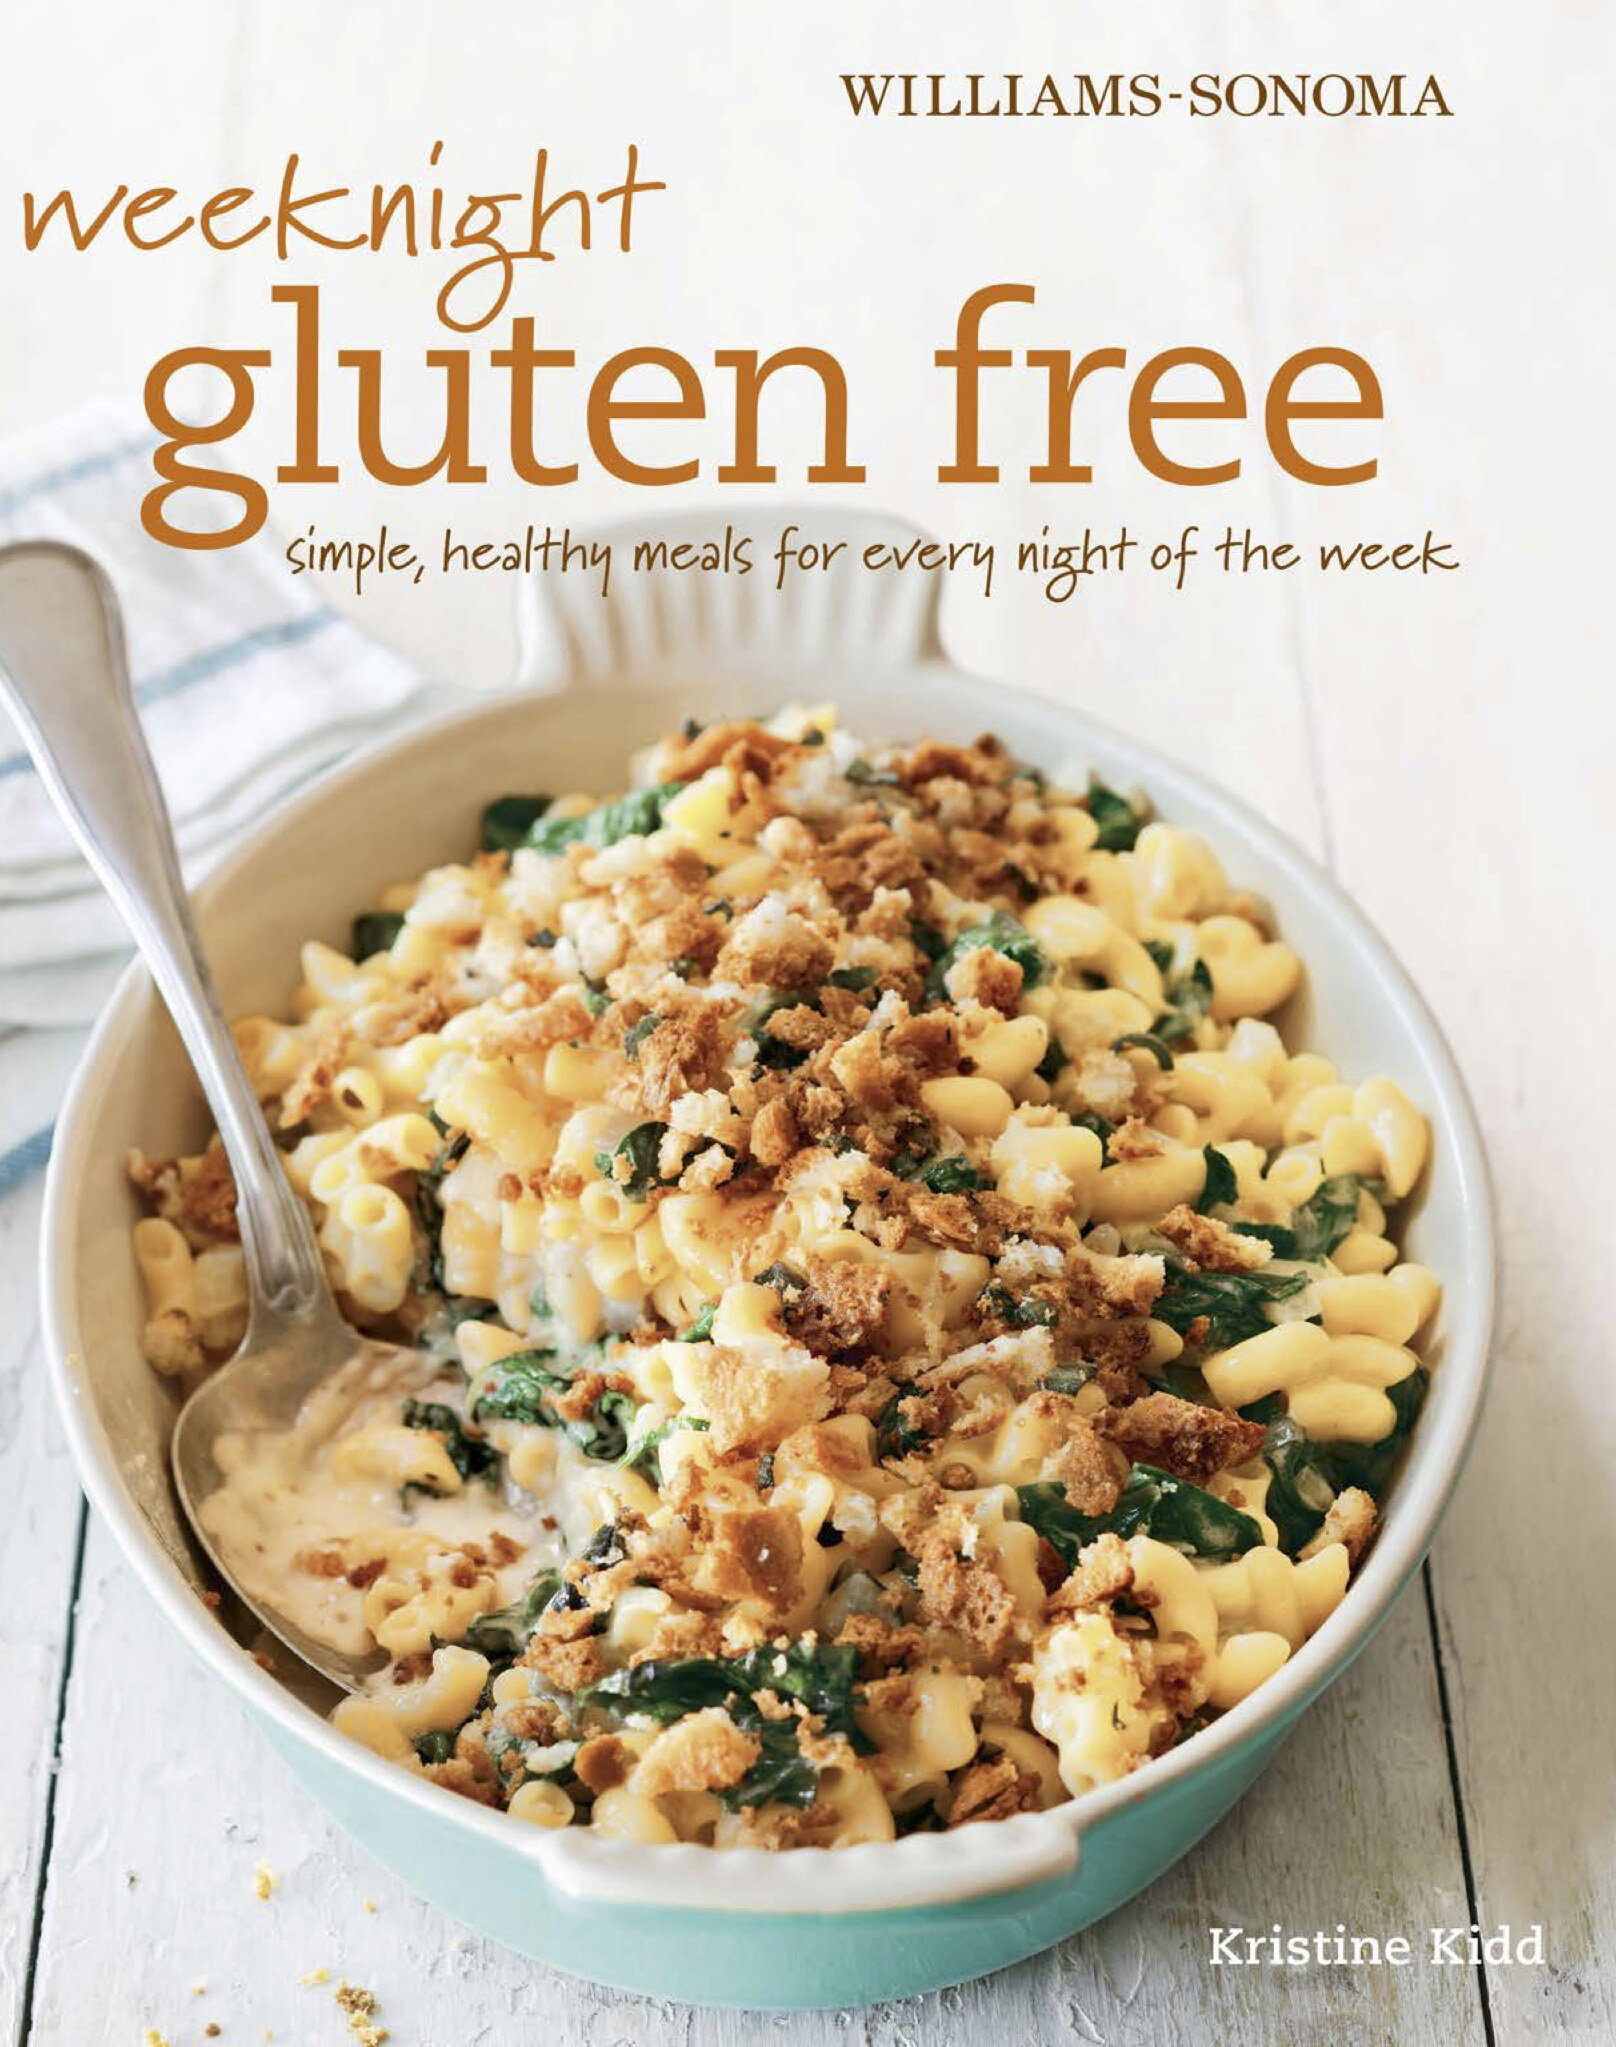 Weeknight Gluten-free by Kristine Kidd